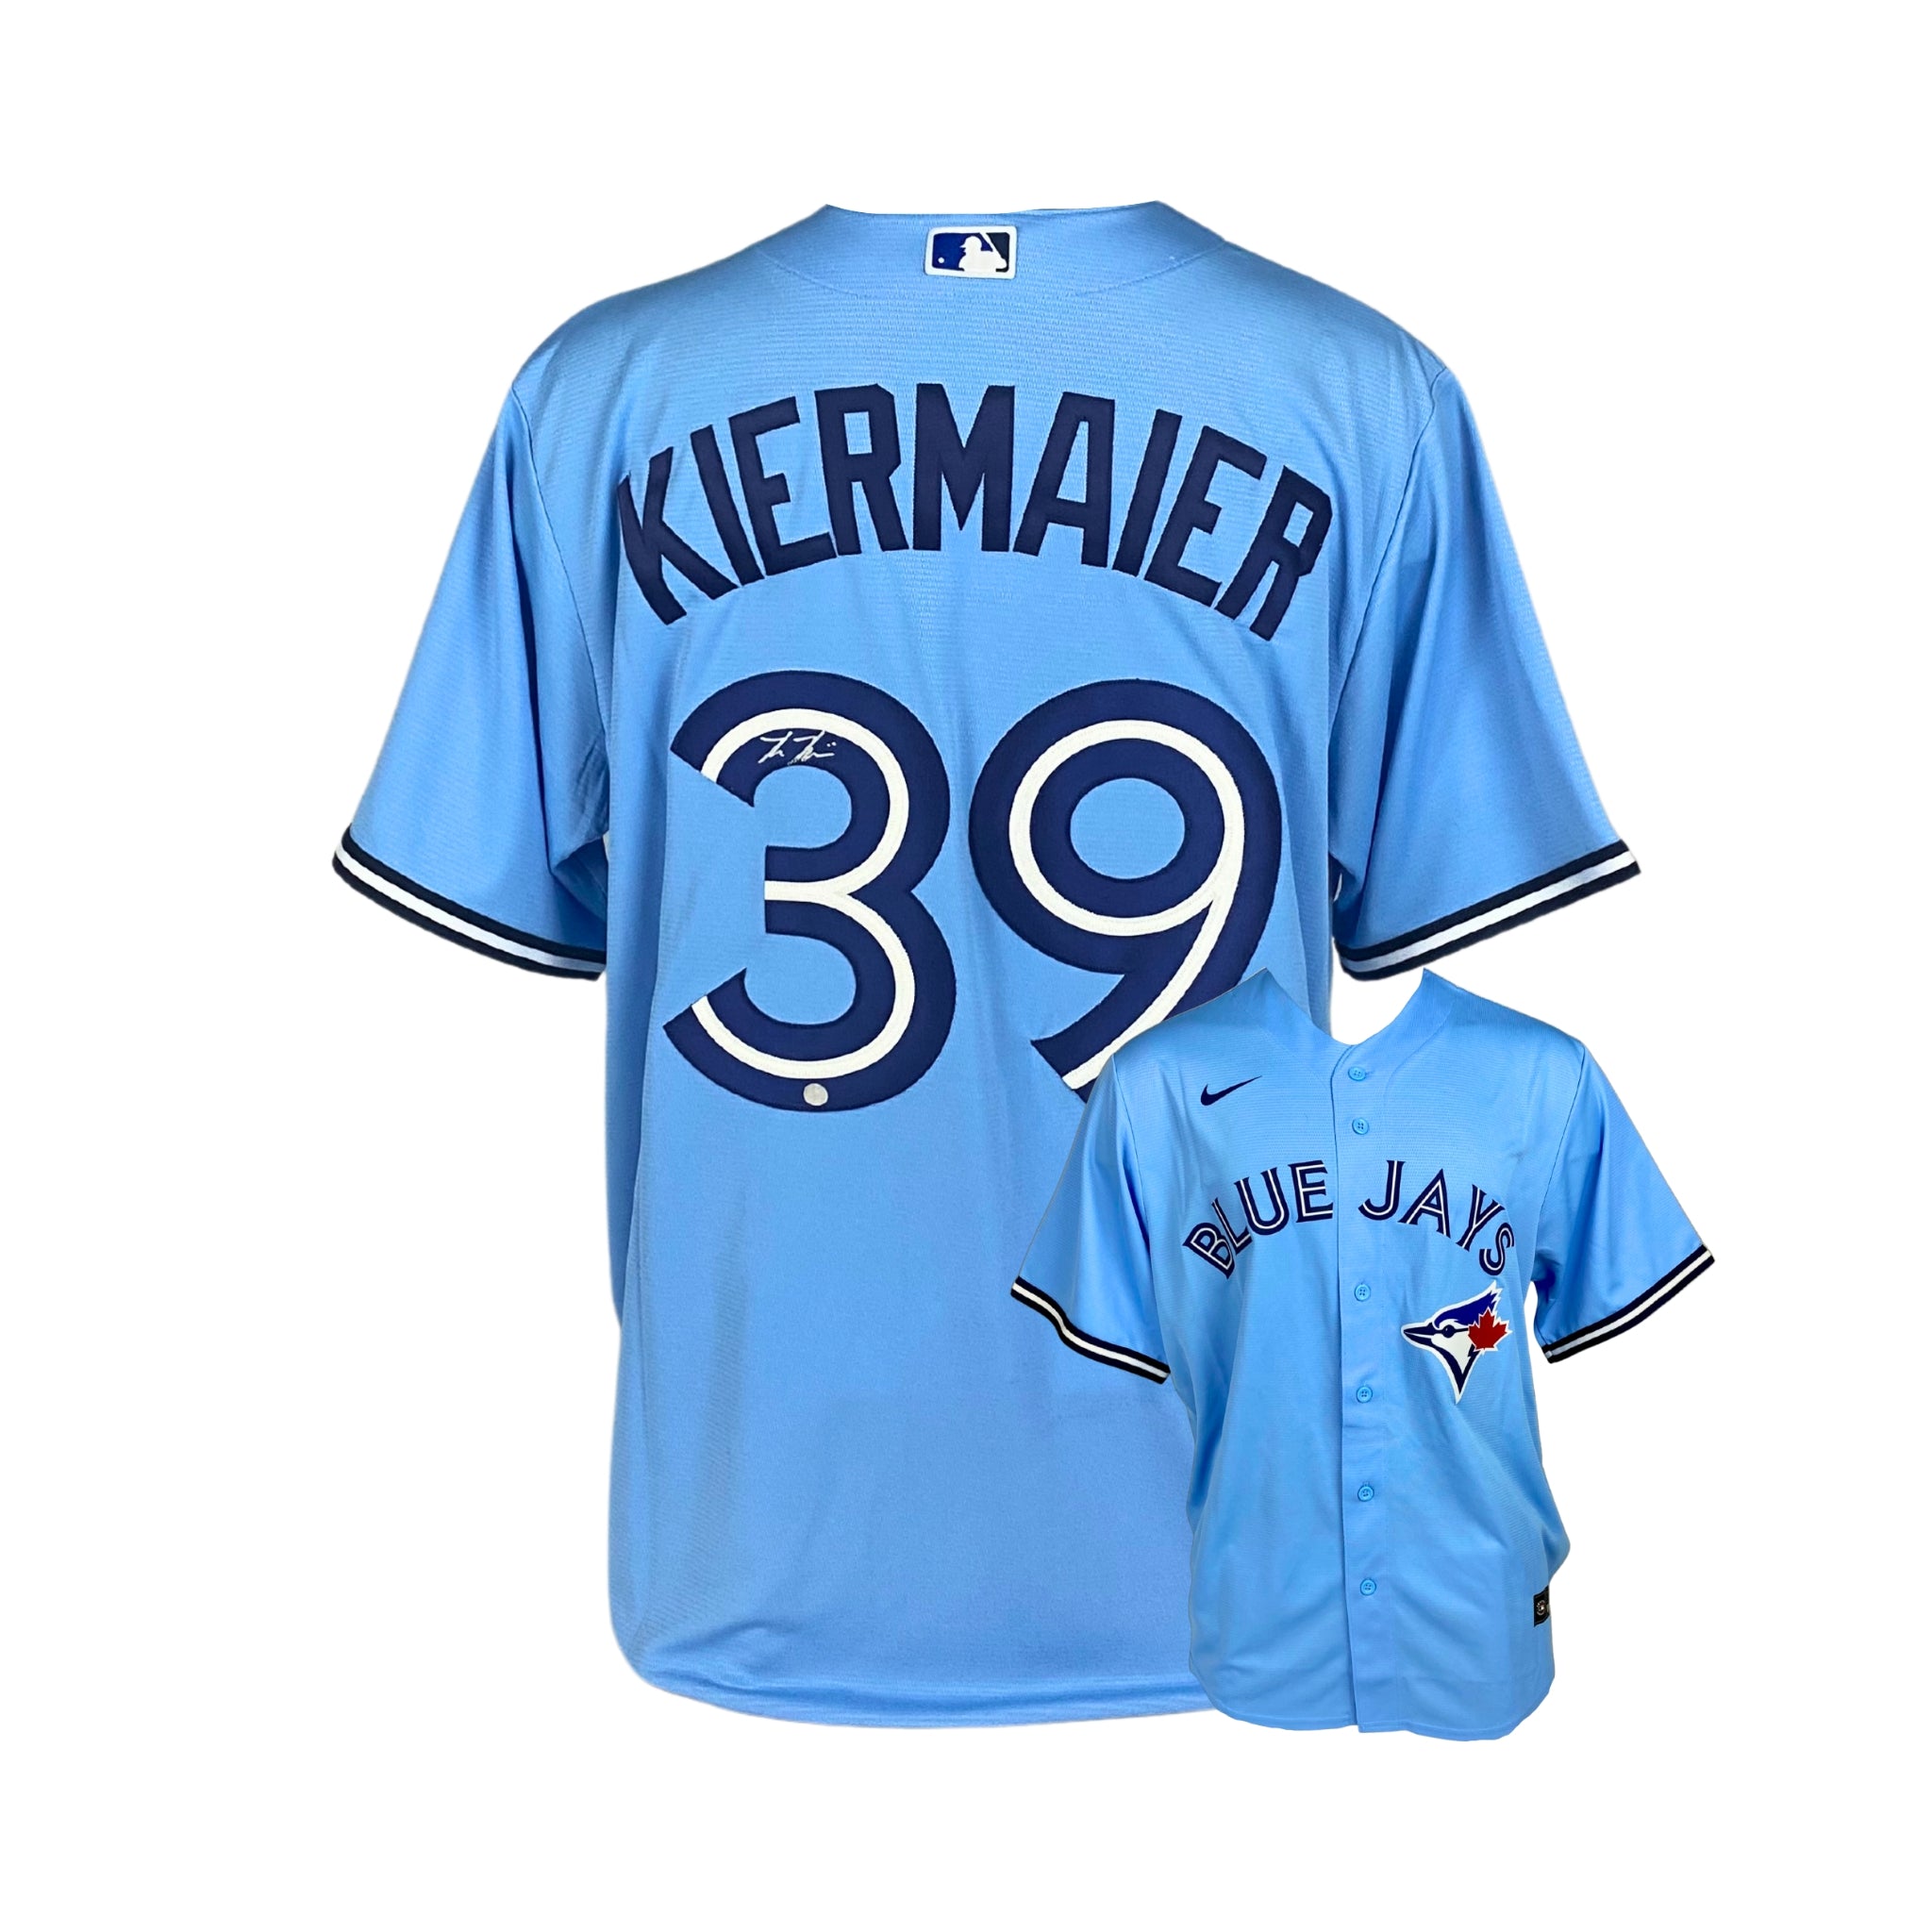 Kevin Kiermaier Toronto Blue Jays Nike Replica Player Jersey - White